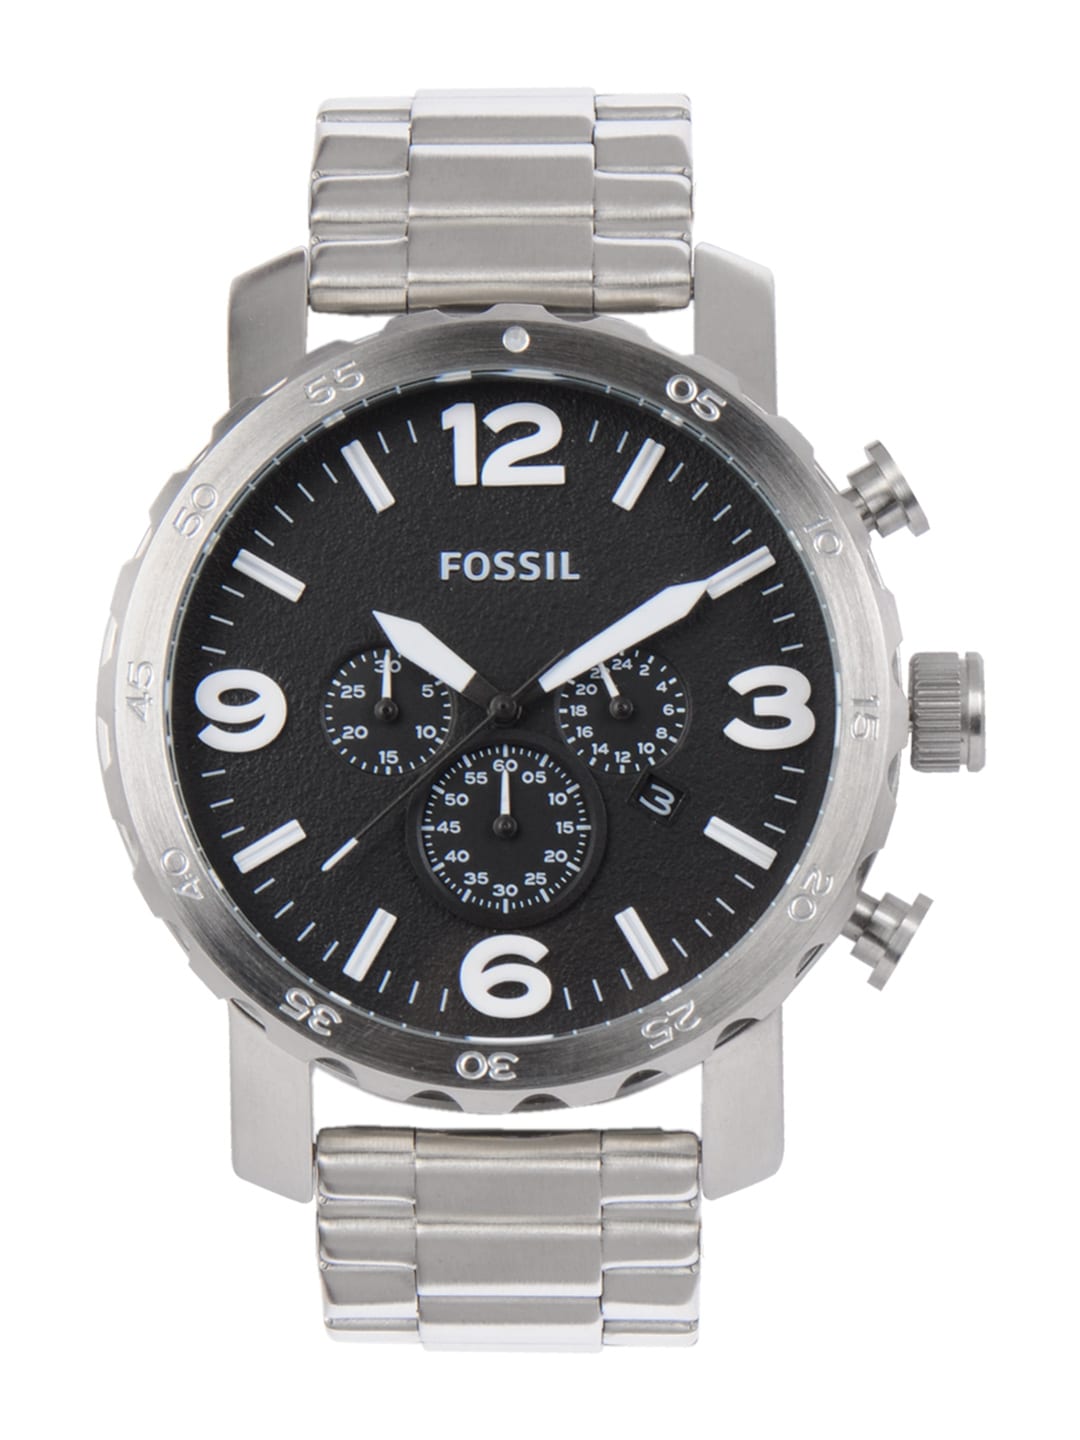 Fossil Men Black Dial Chronograph Watch JR1353